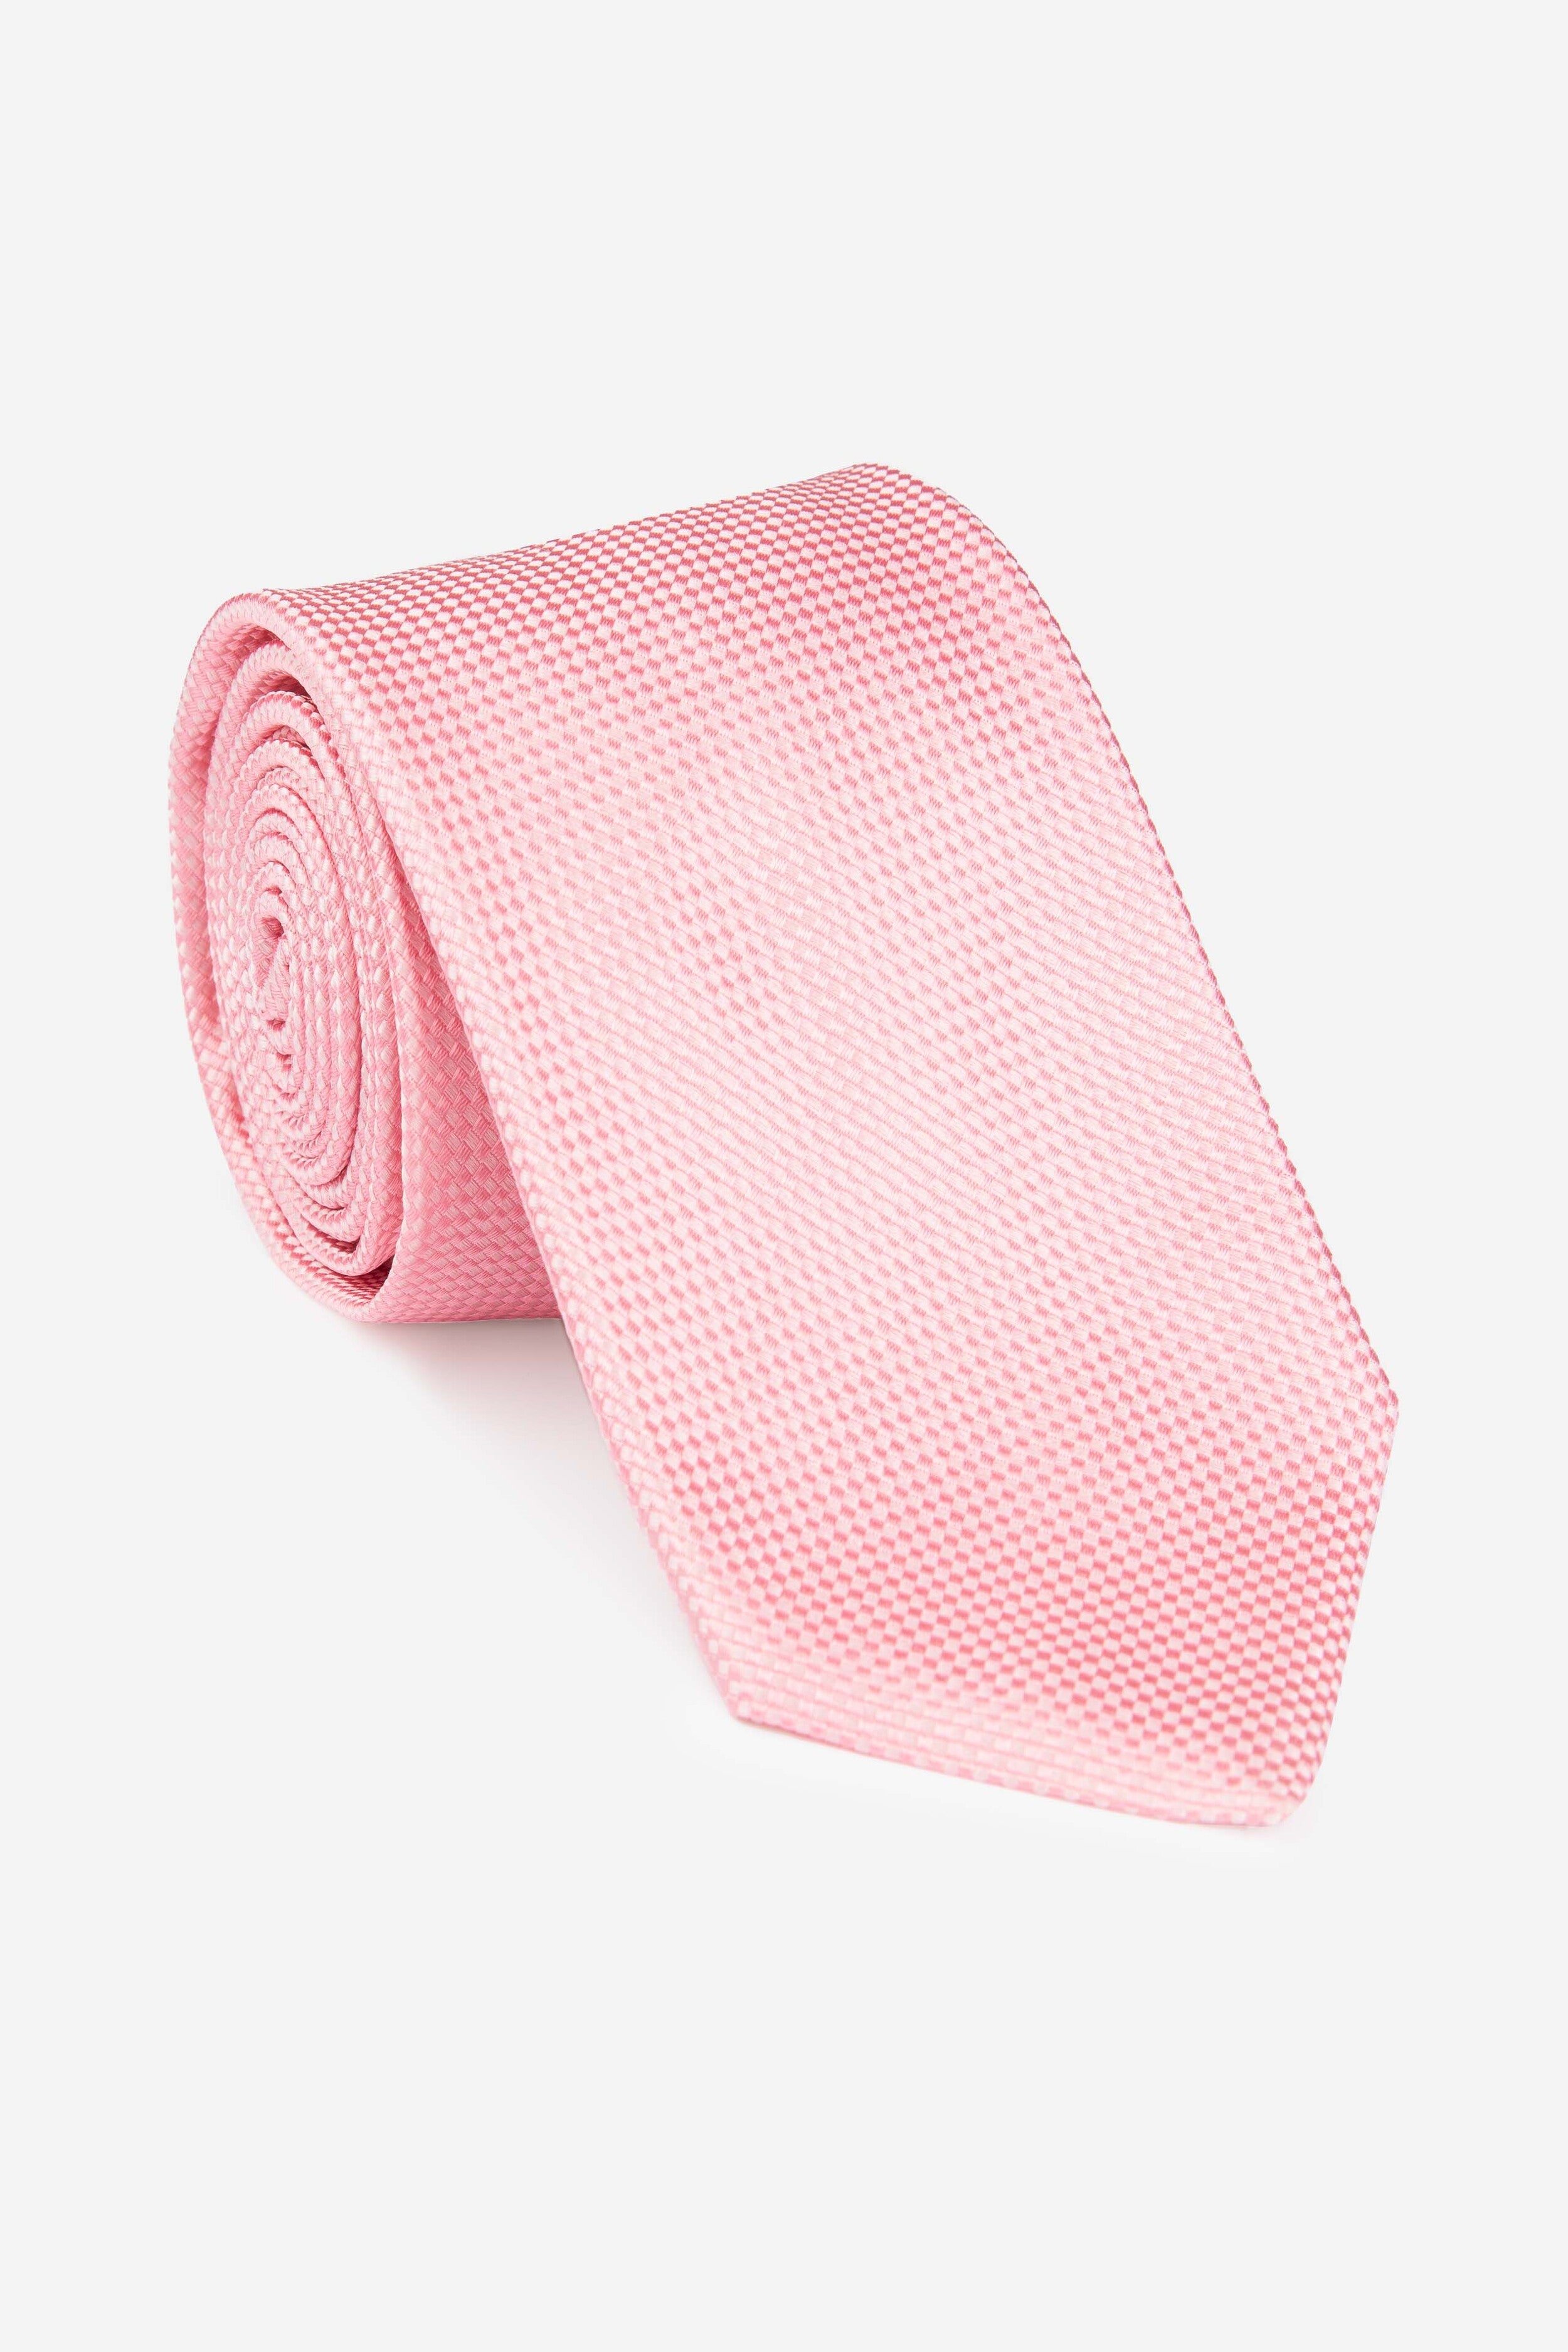 Cravatta in seta microfantasia - ROSA